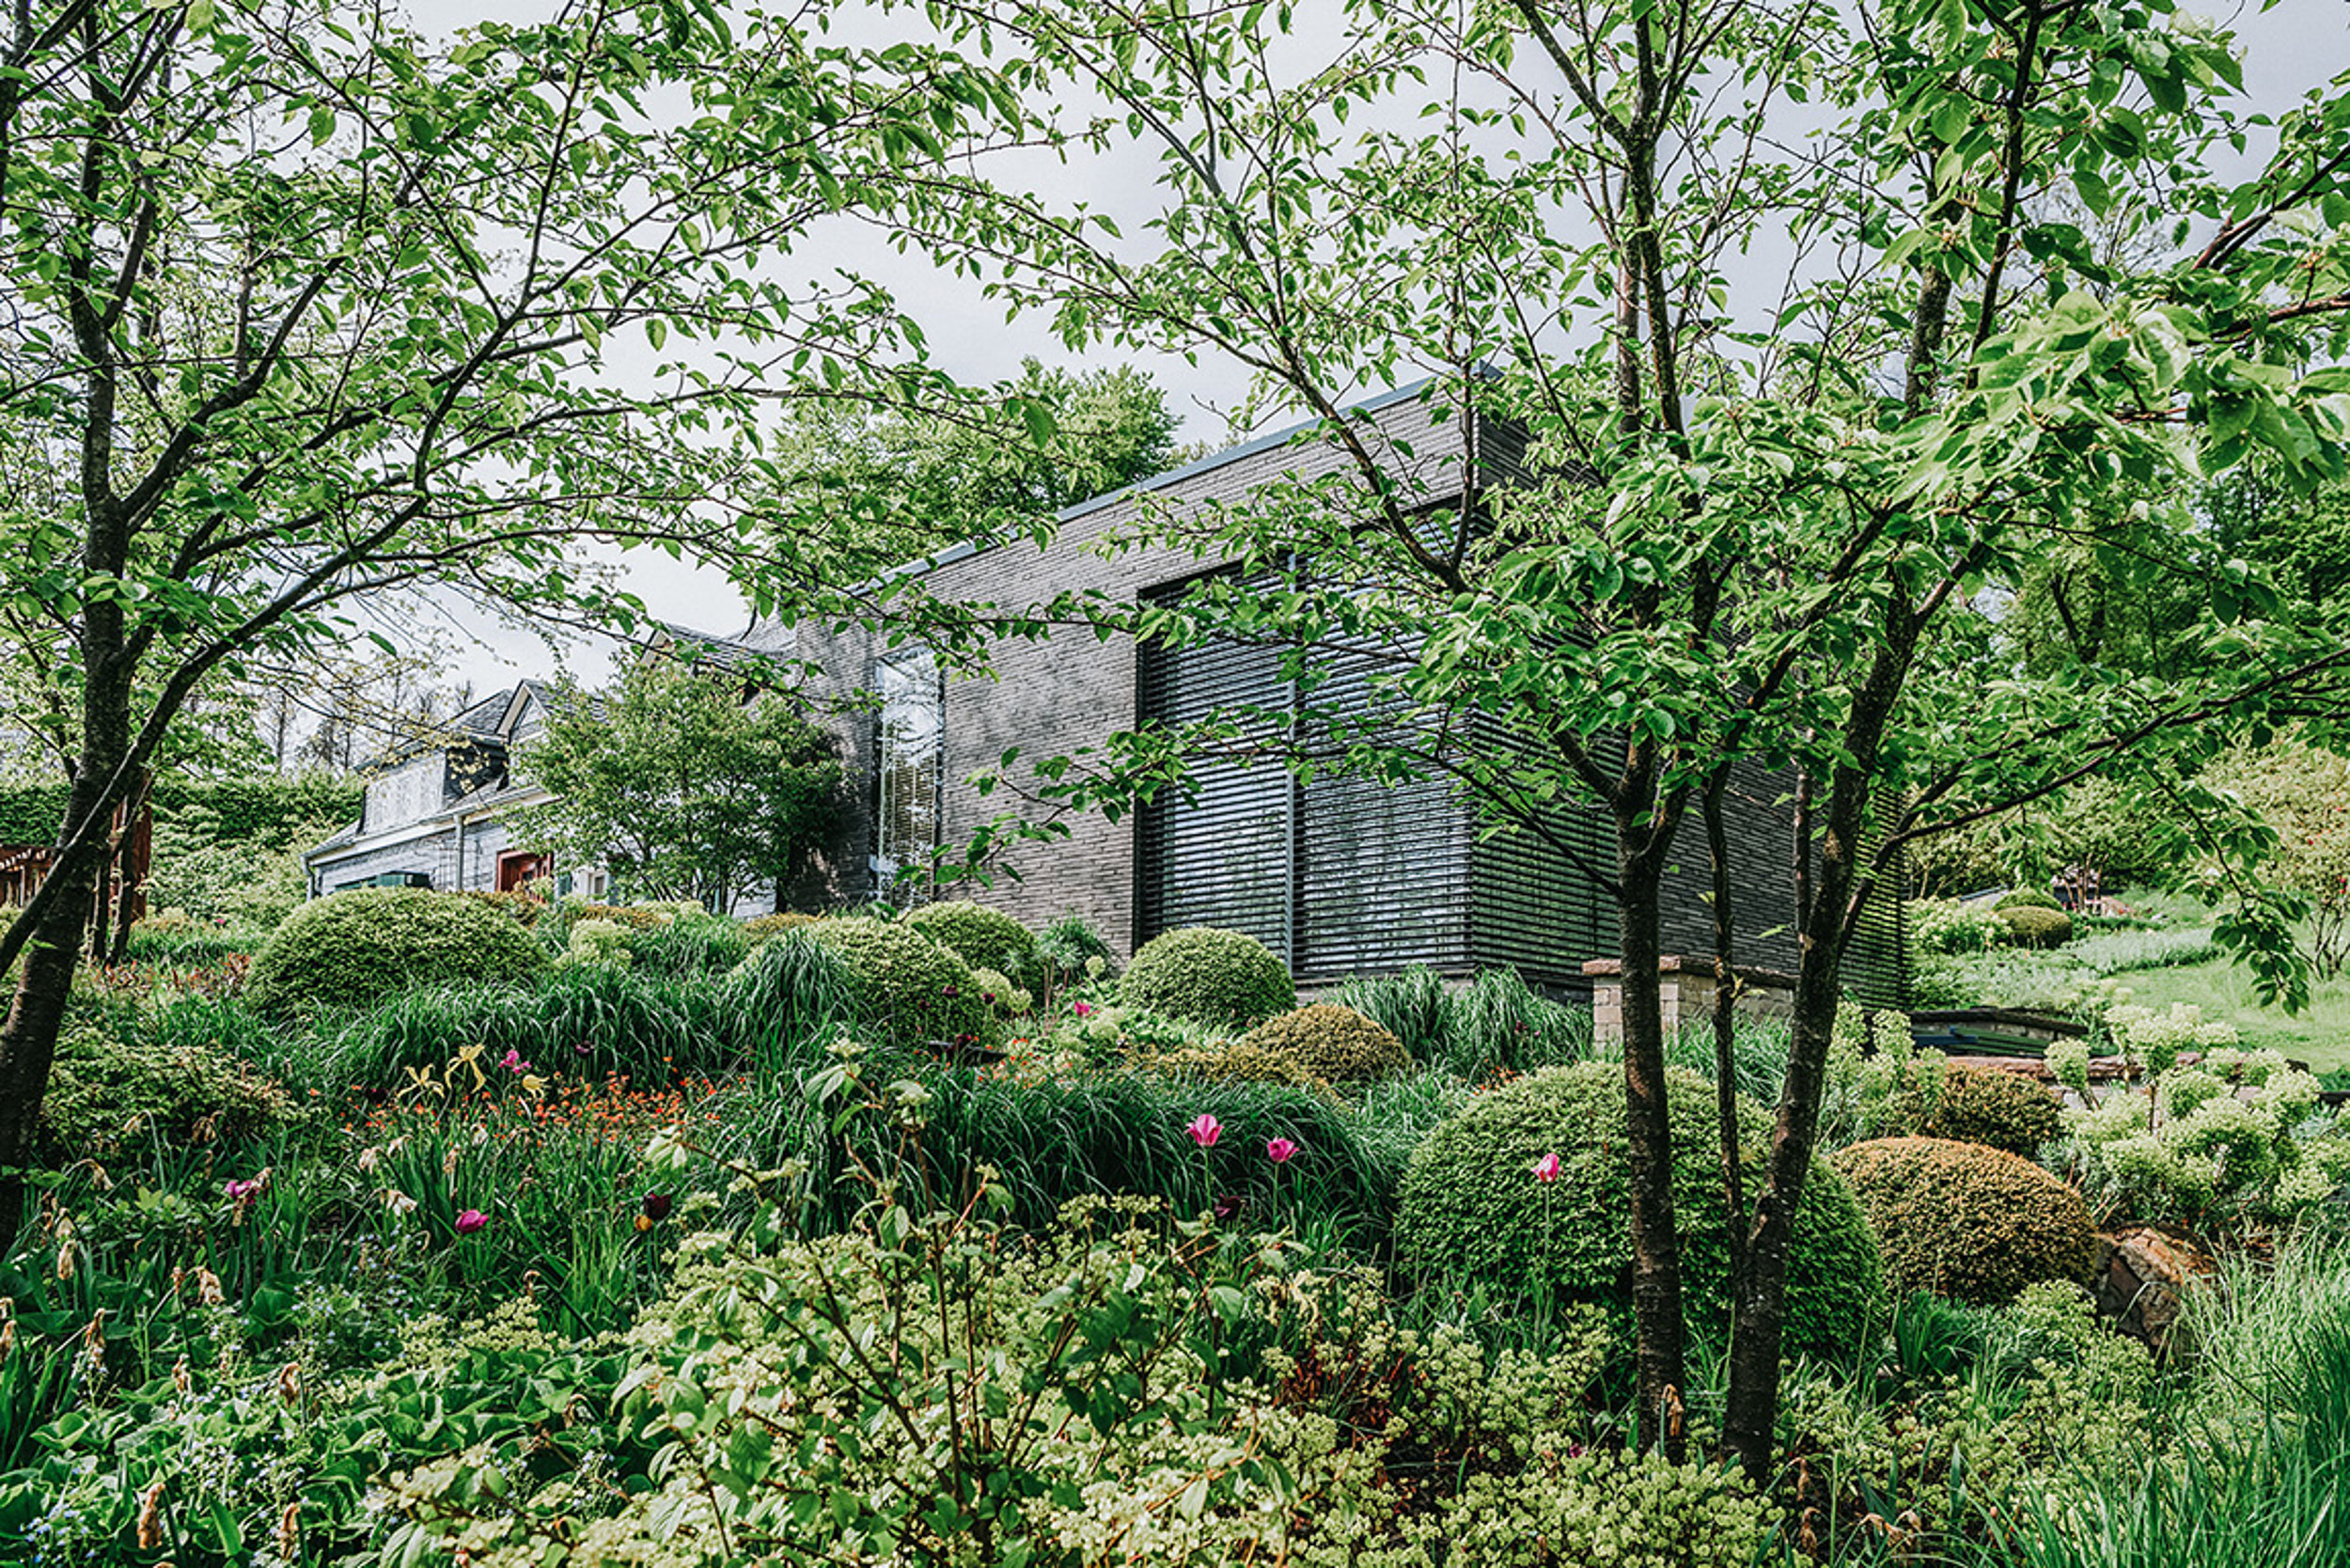 Privatgarten mit dichter grüner Bepflanzung am Hang 